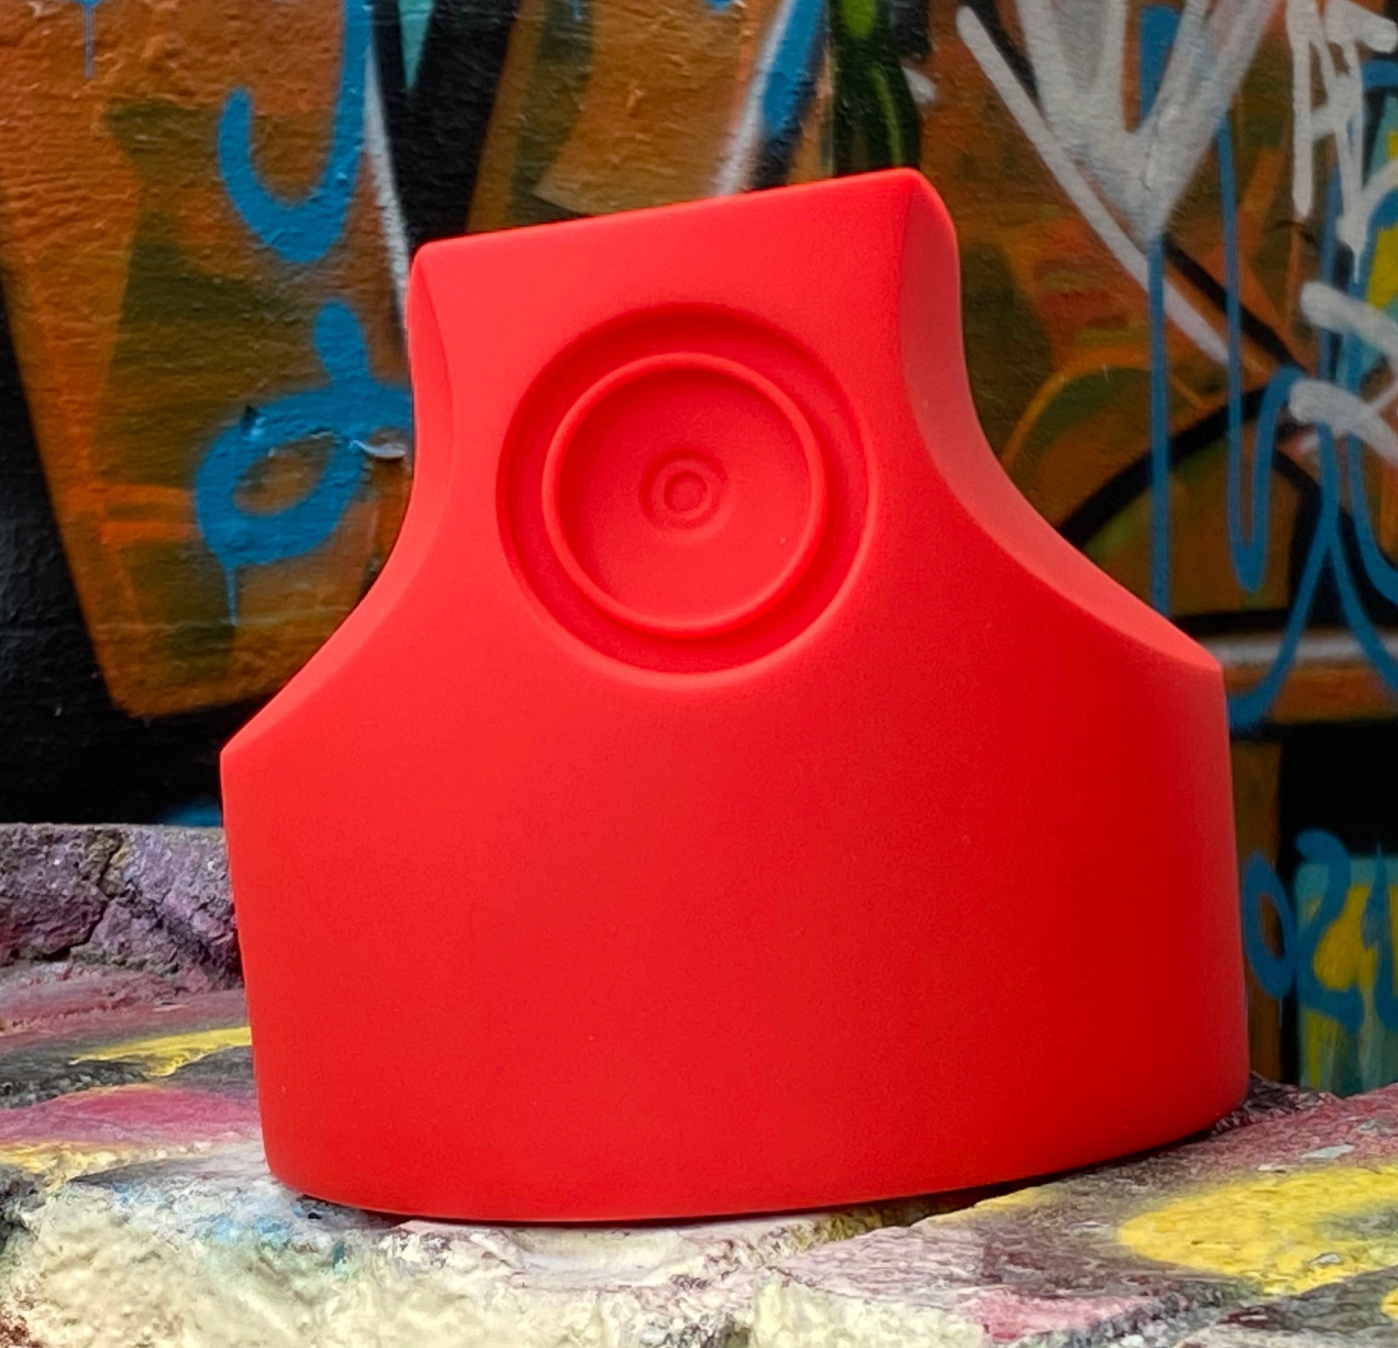 Banana Skinny Cap DIY Red vinyl figure by Playful Gorilla x Tenacious Toys Available Now